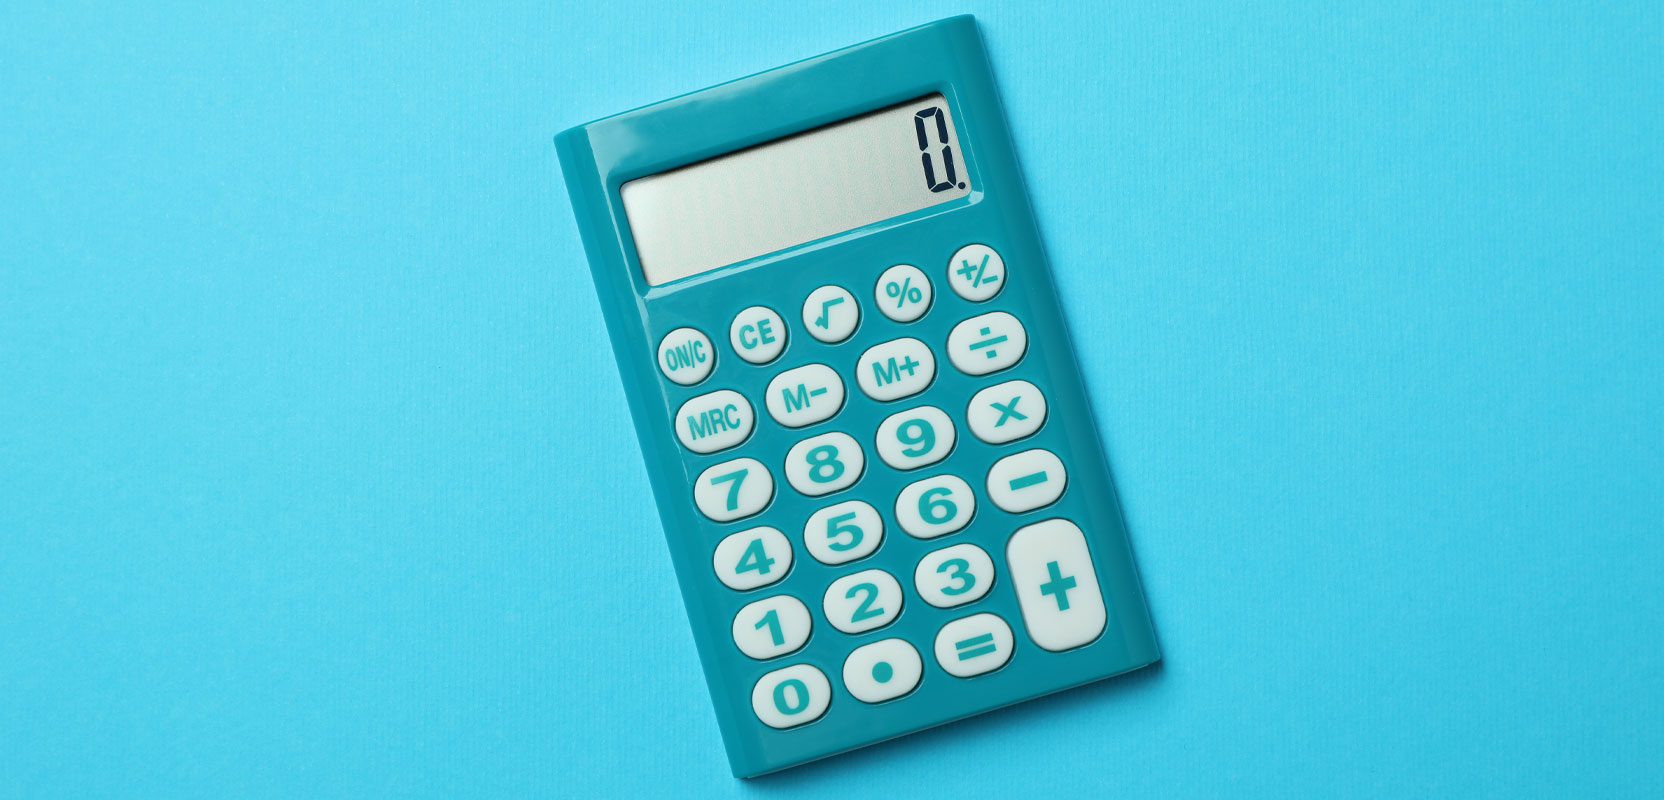 Calculator against a blue background